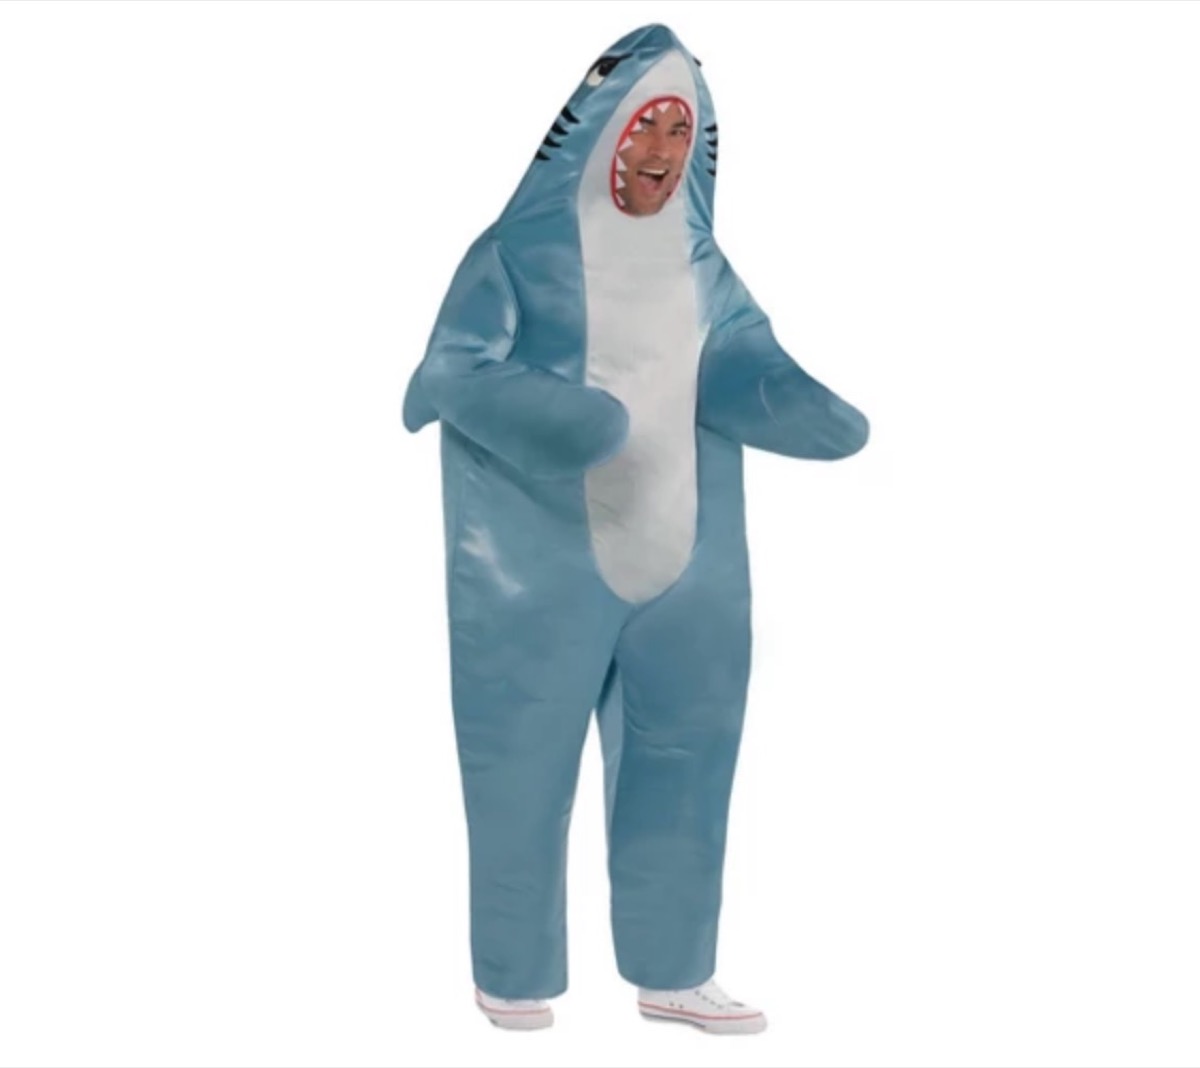 shark costume, target halloween costumes